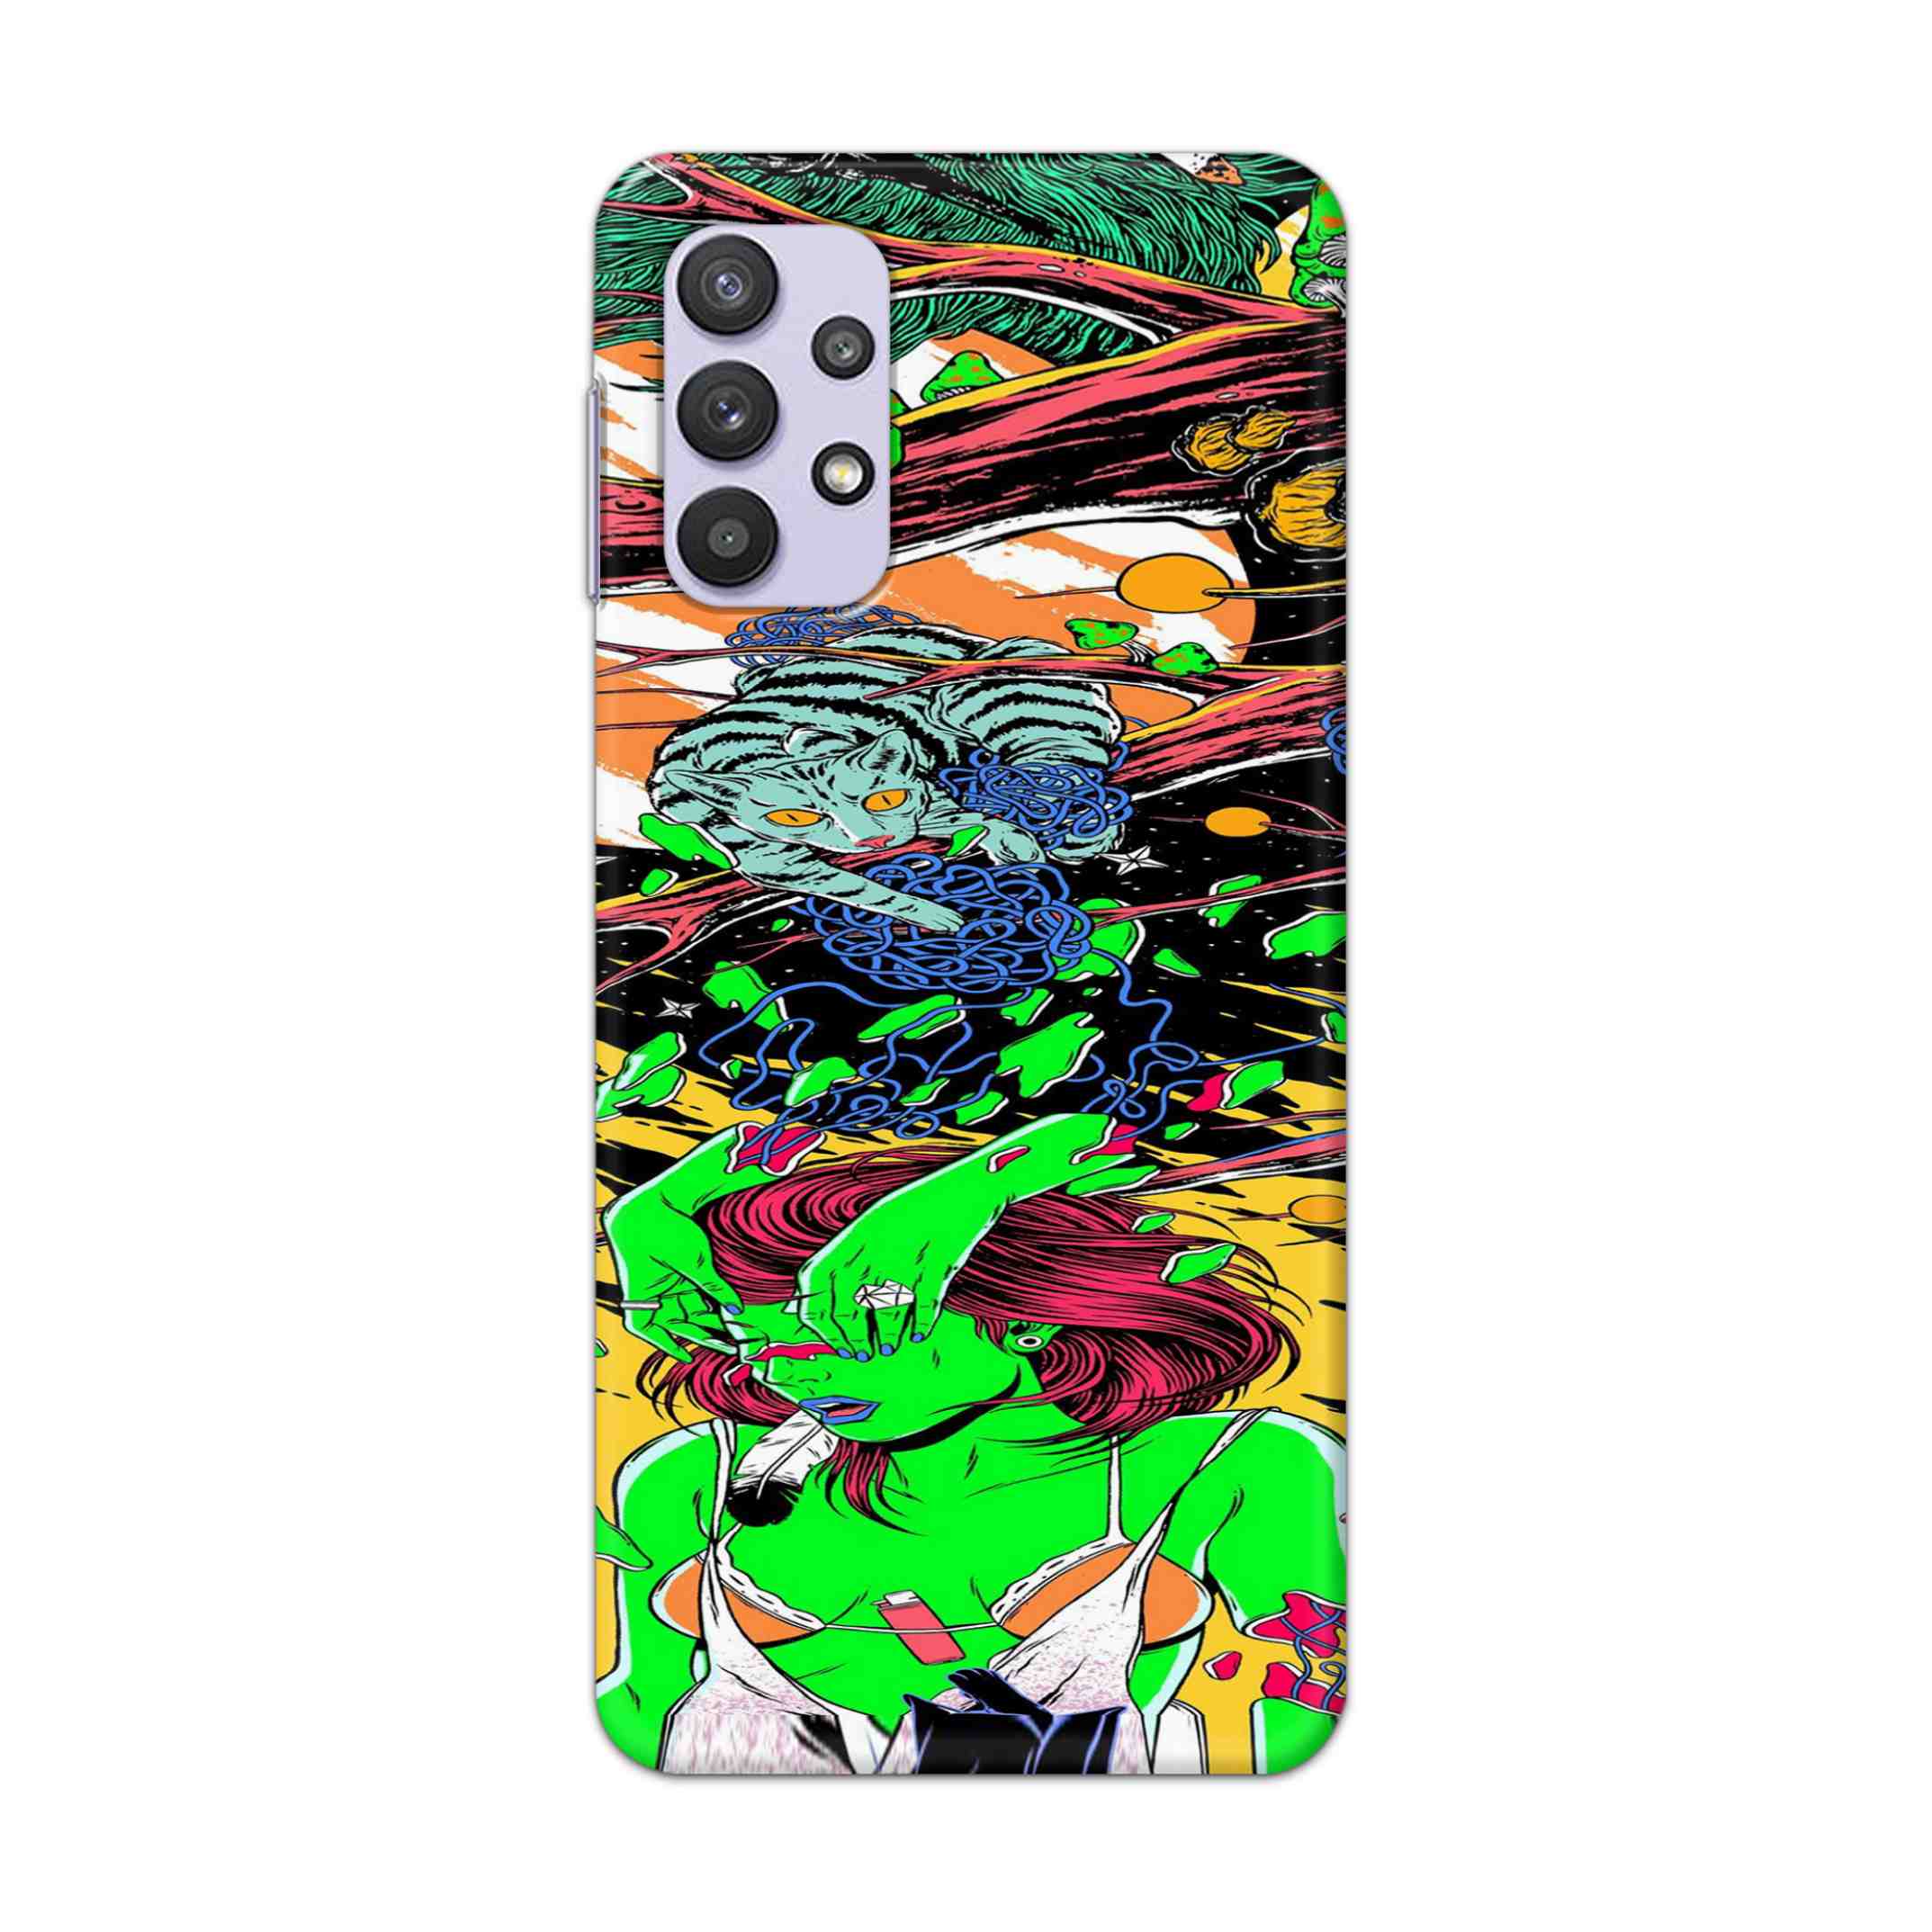 Buy Green Girl Art Hard Back Mobile Phone Case Cover For Samsung A32 5G Online